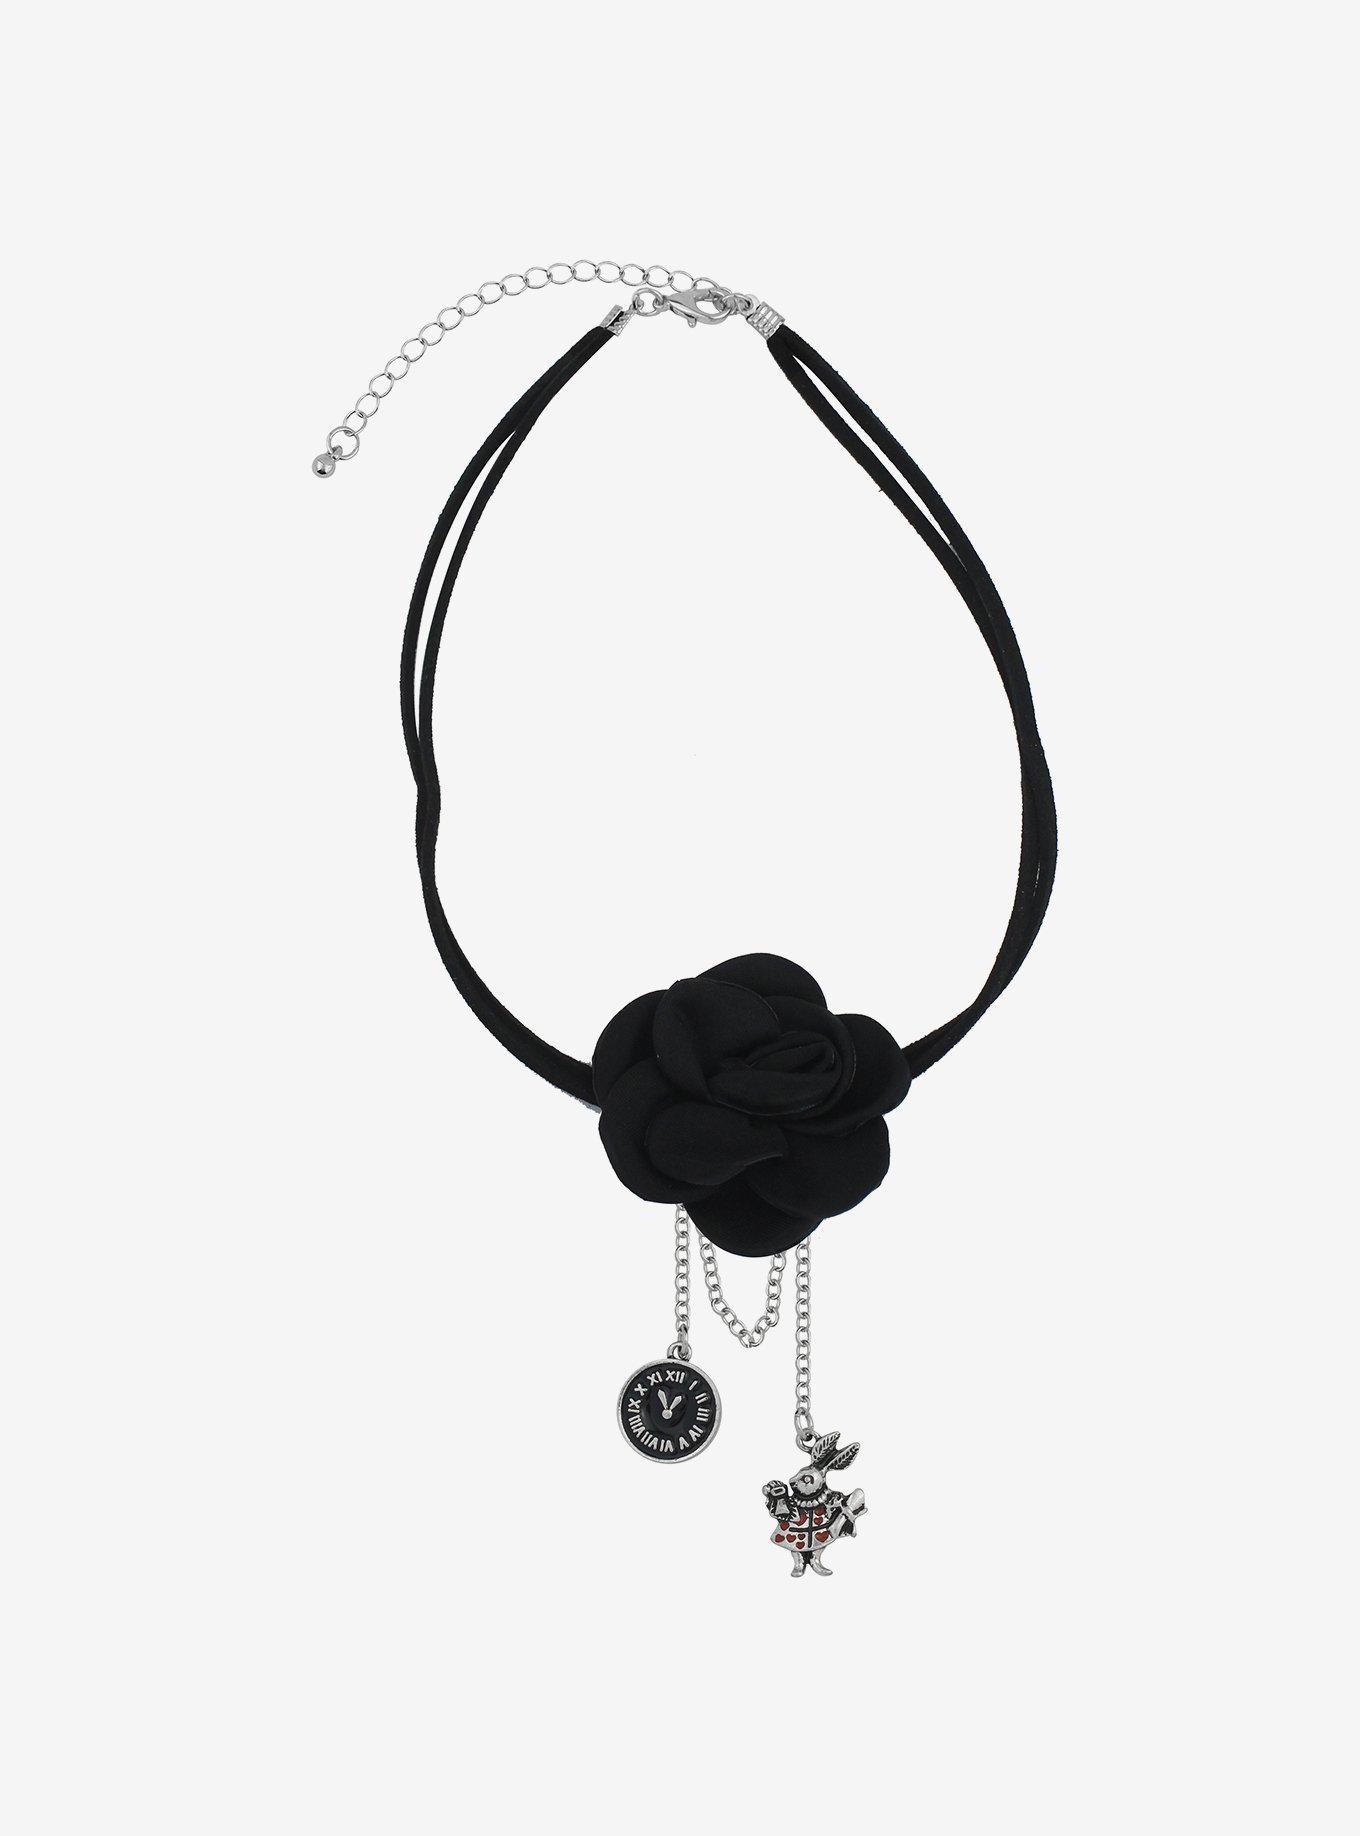 Paxcoo 50pcs Black Choker Necklaces Set